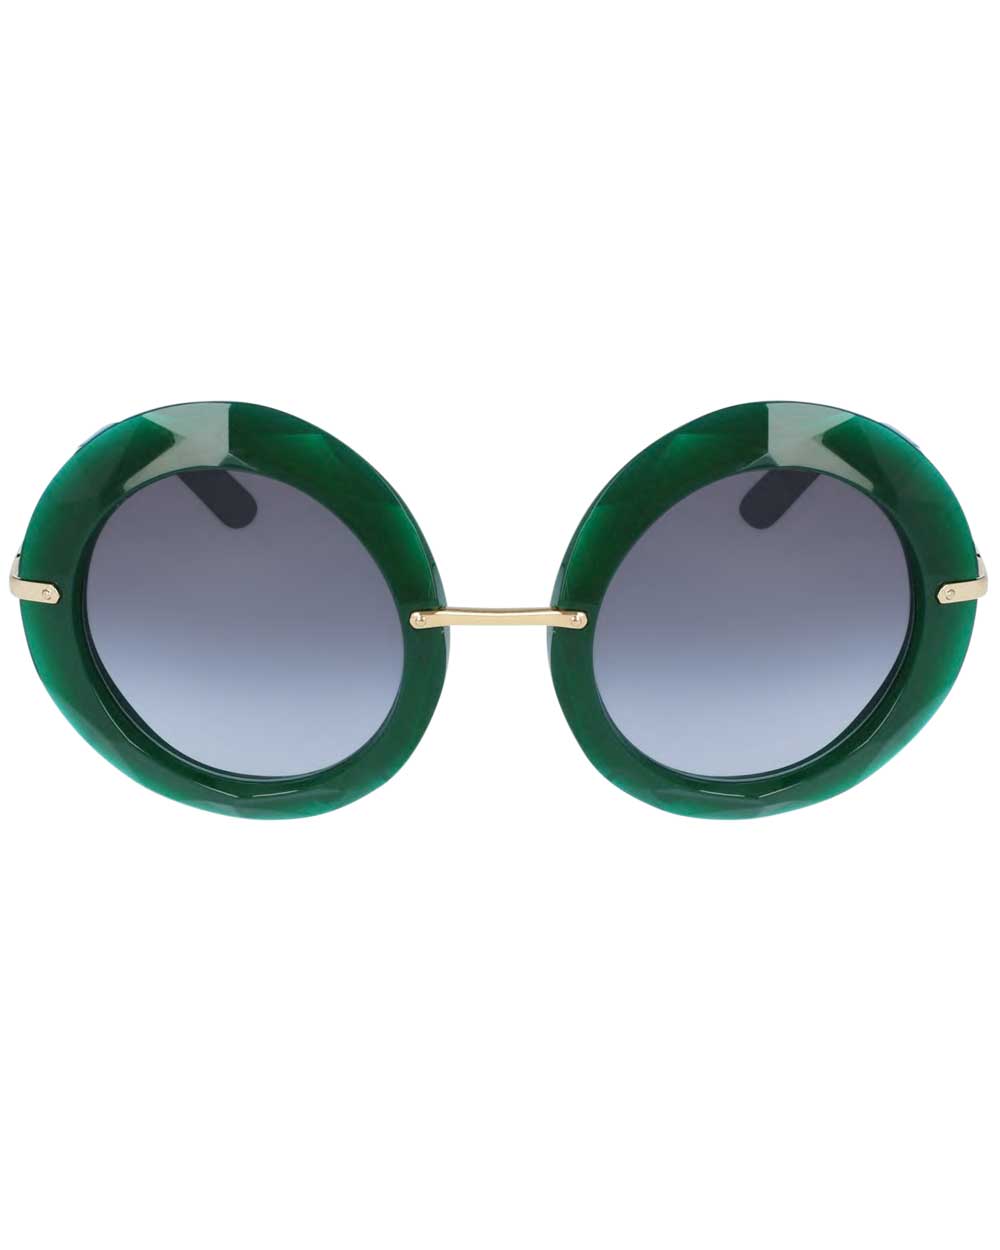 Dolce & Gabbana sunglasses, $281, from Sunglass Hut